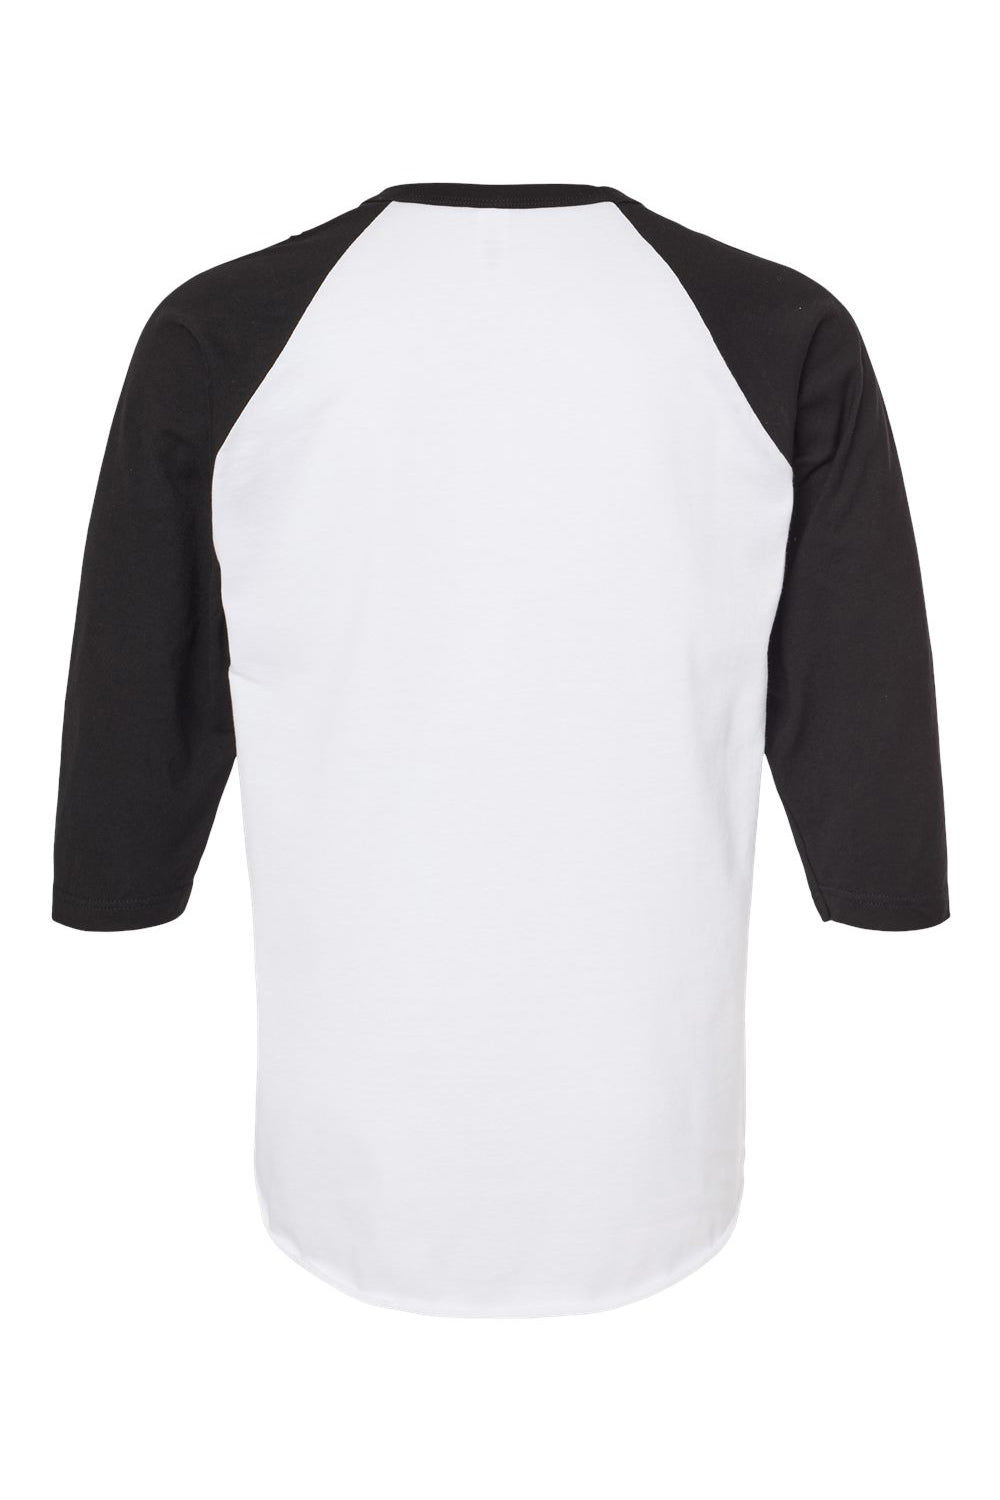 Tultex 245 Mens Fine Jersey Raglan 3/4 Sleeve Crewneck T-Shirt White/Black Flat Back